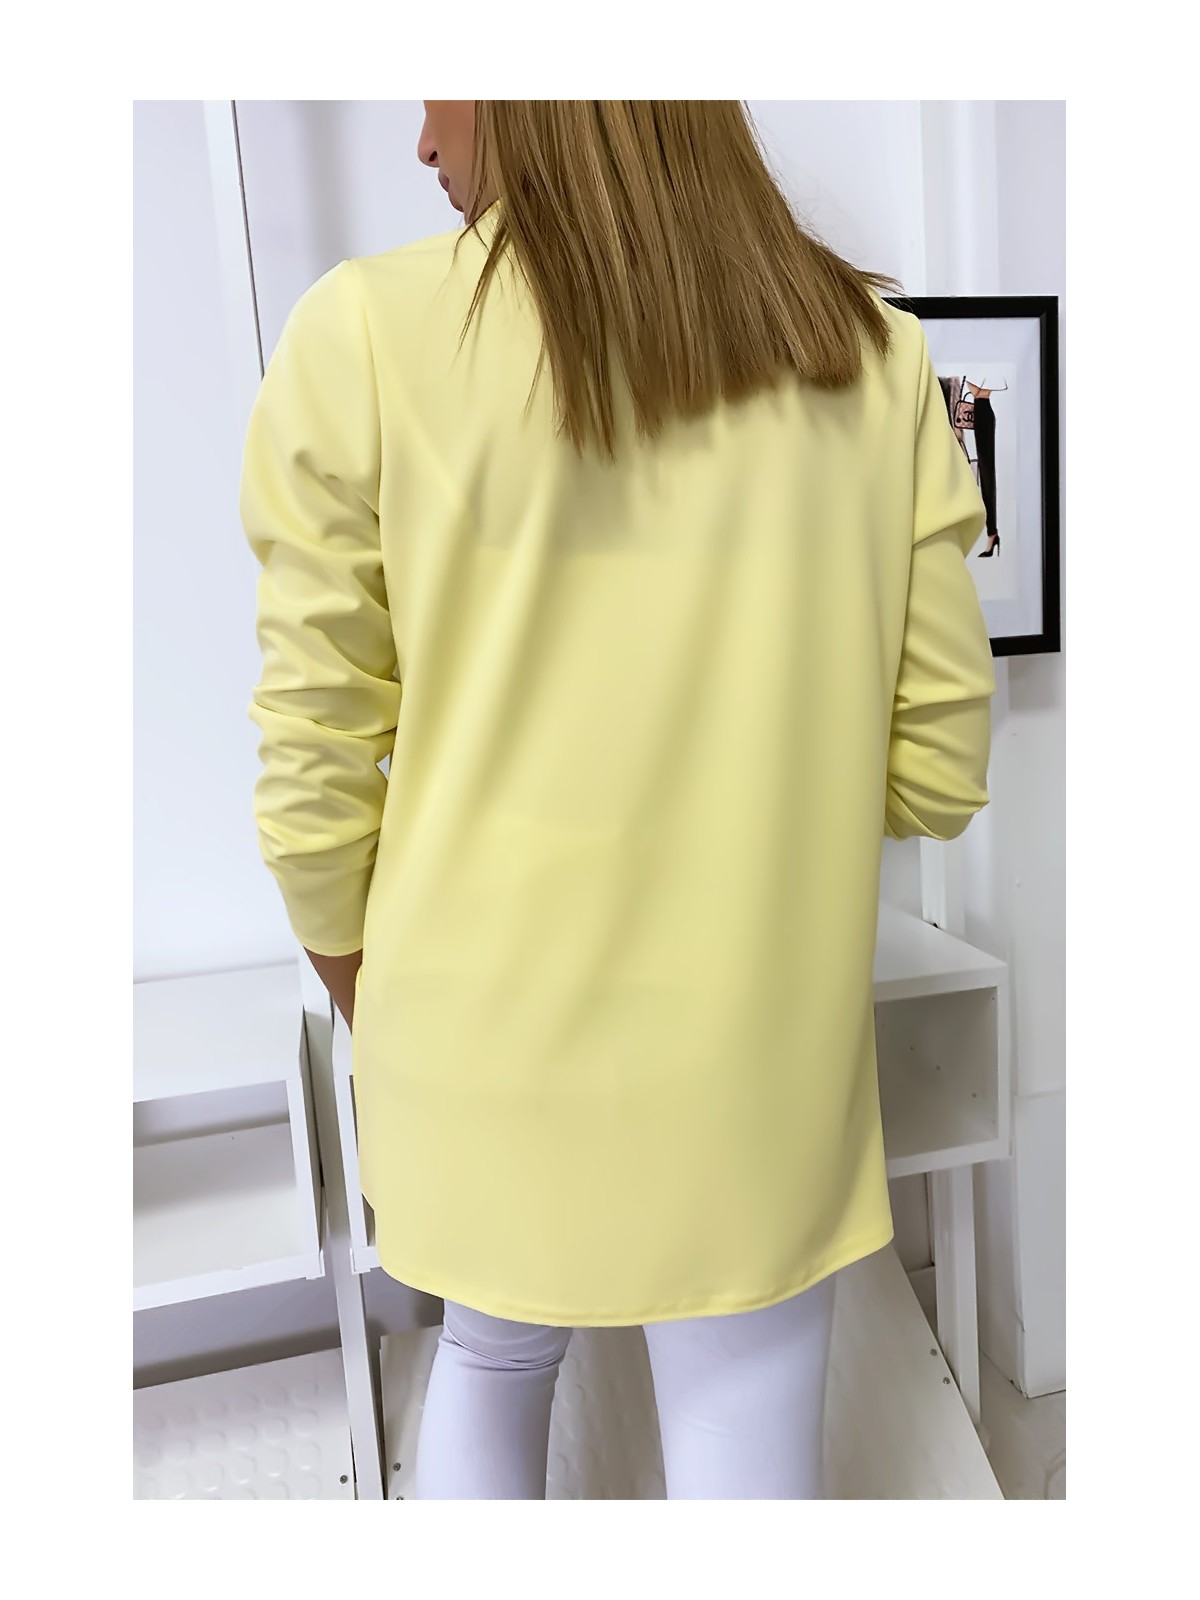 Veste Blazer jaune col châle avec poches. Blazer femme 1526 - 5